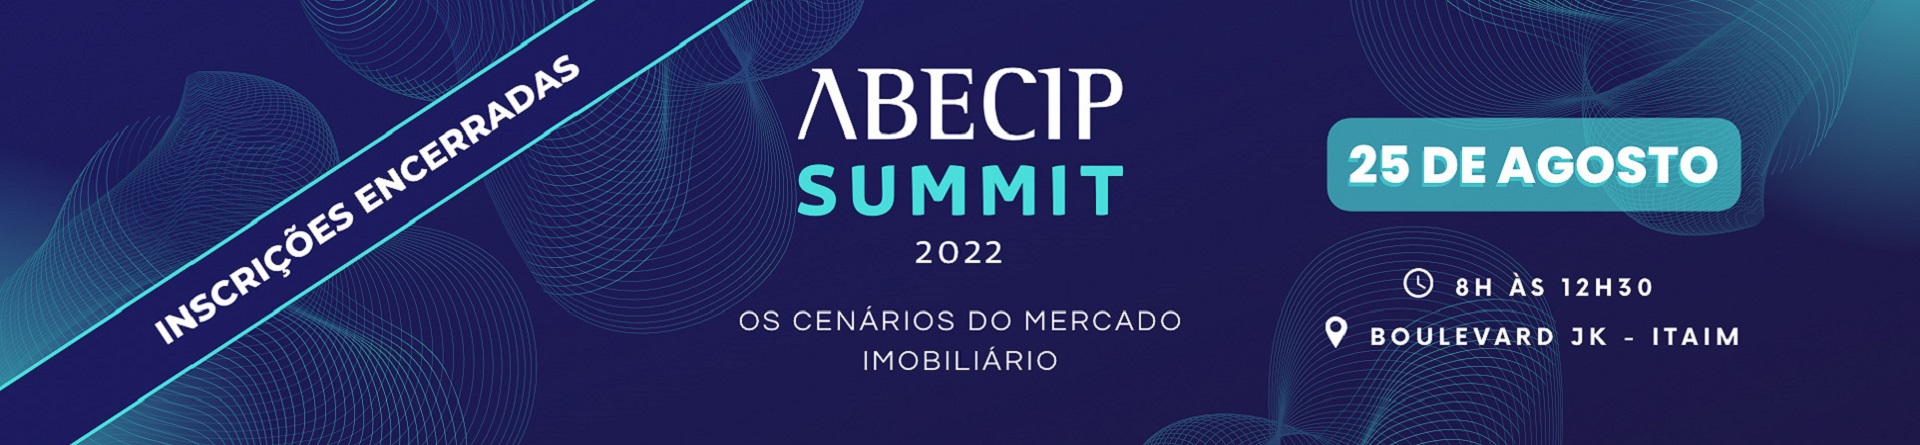 Abecip Summit 2022 - inscrições encerradas